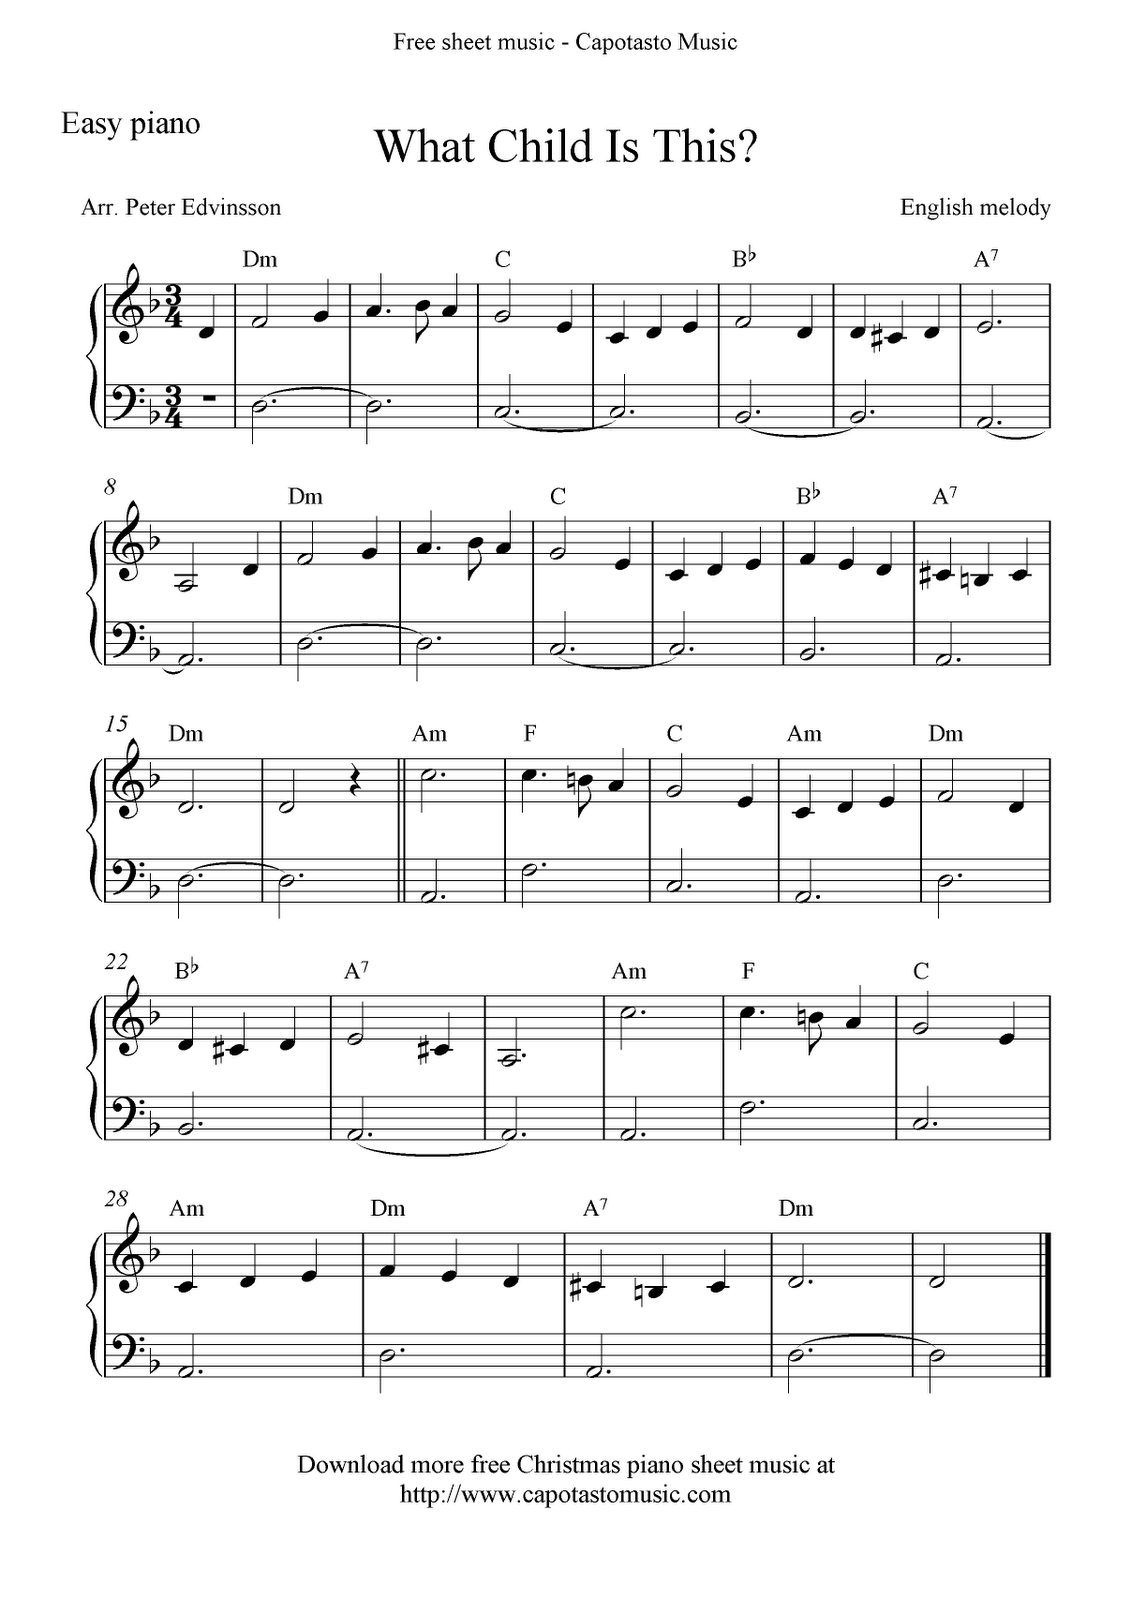 Free Printable Christmas Sheet Music | Free Sheet Music Scores: Free - Free Printable Christmas Music Sheets Piano